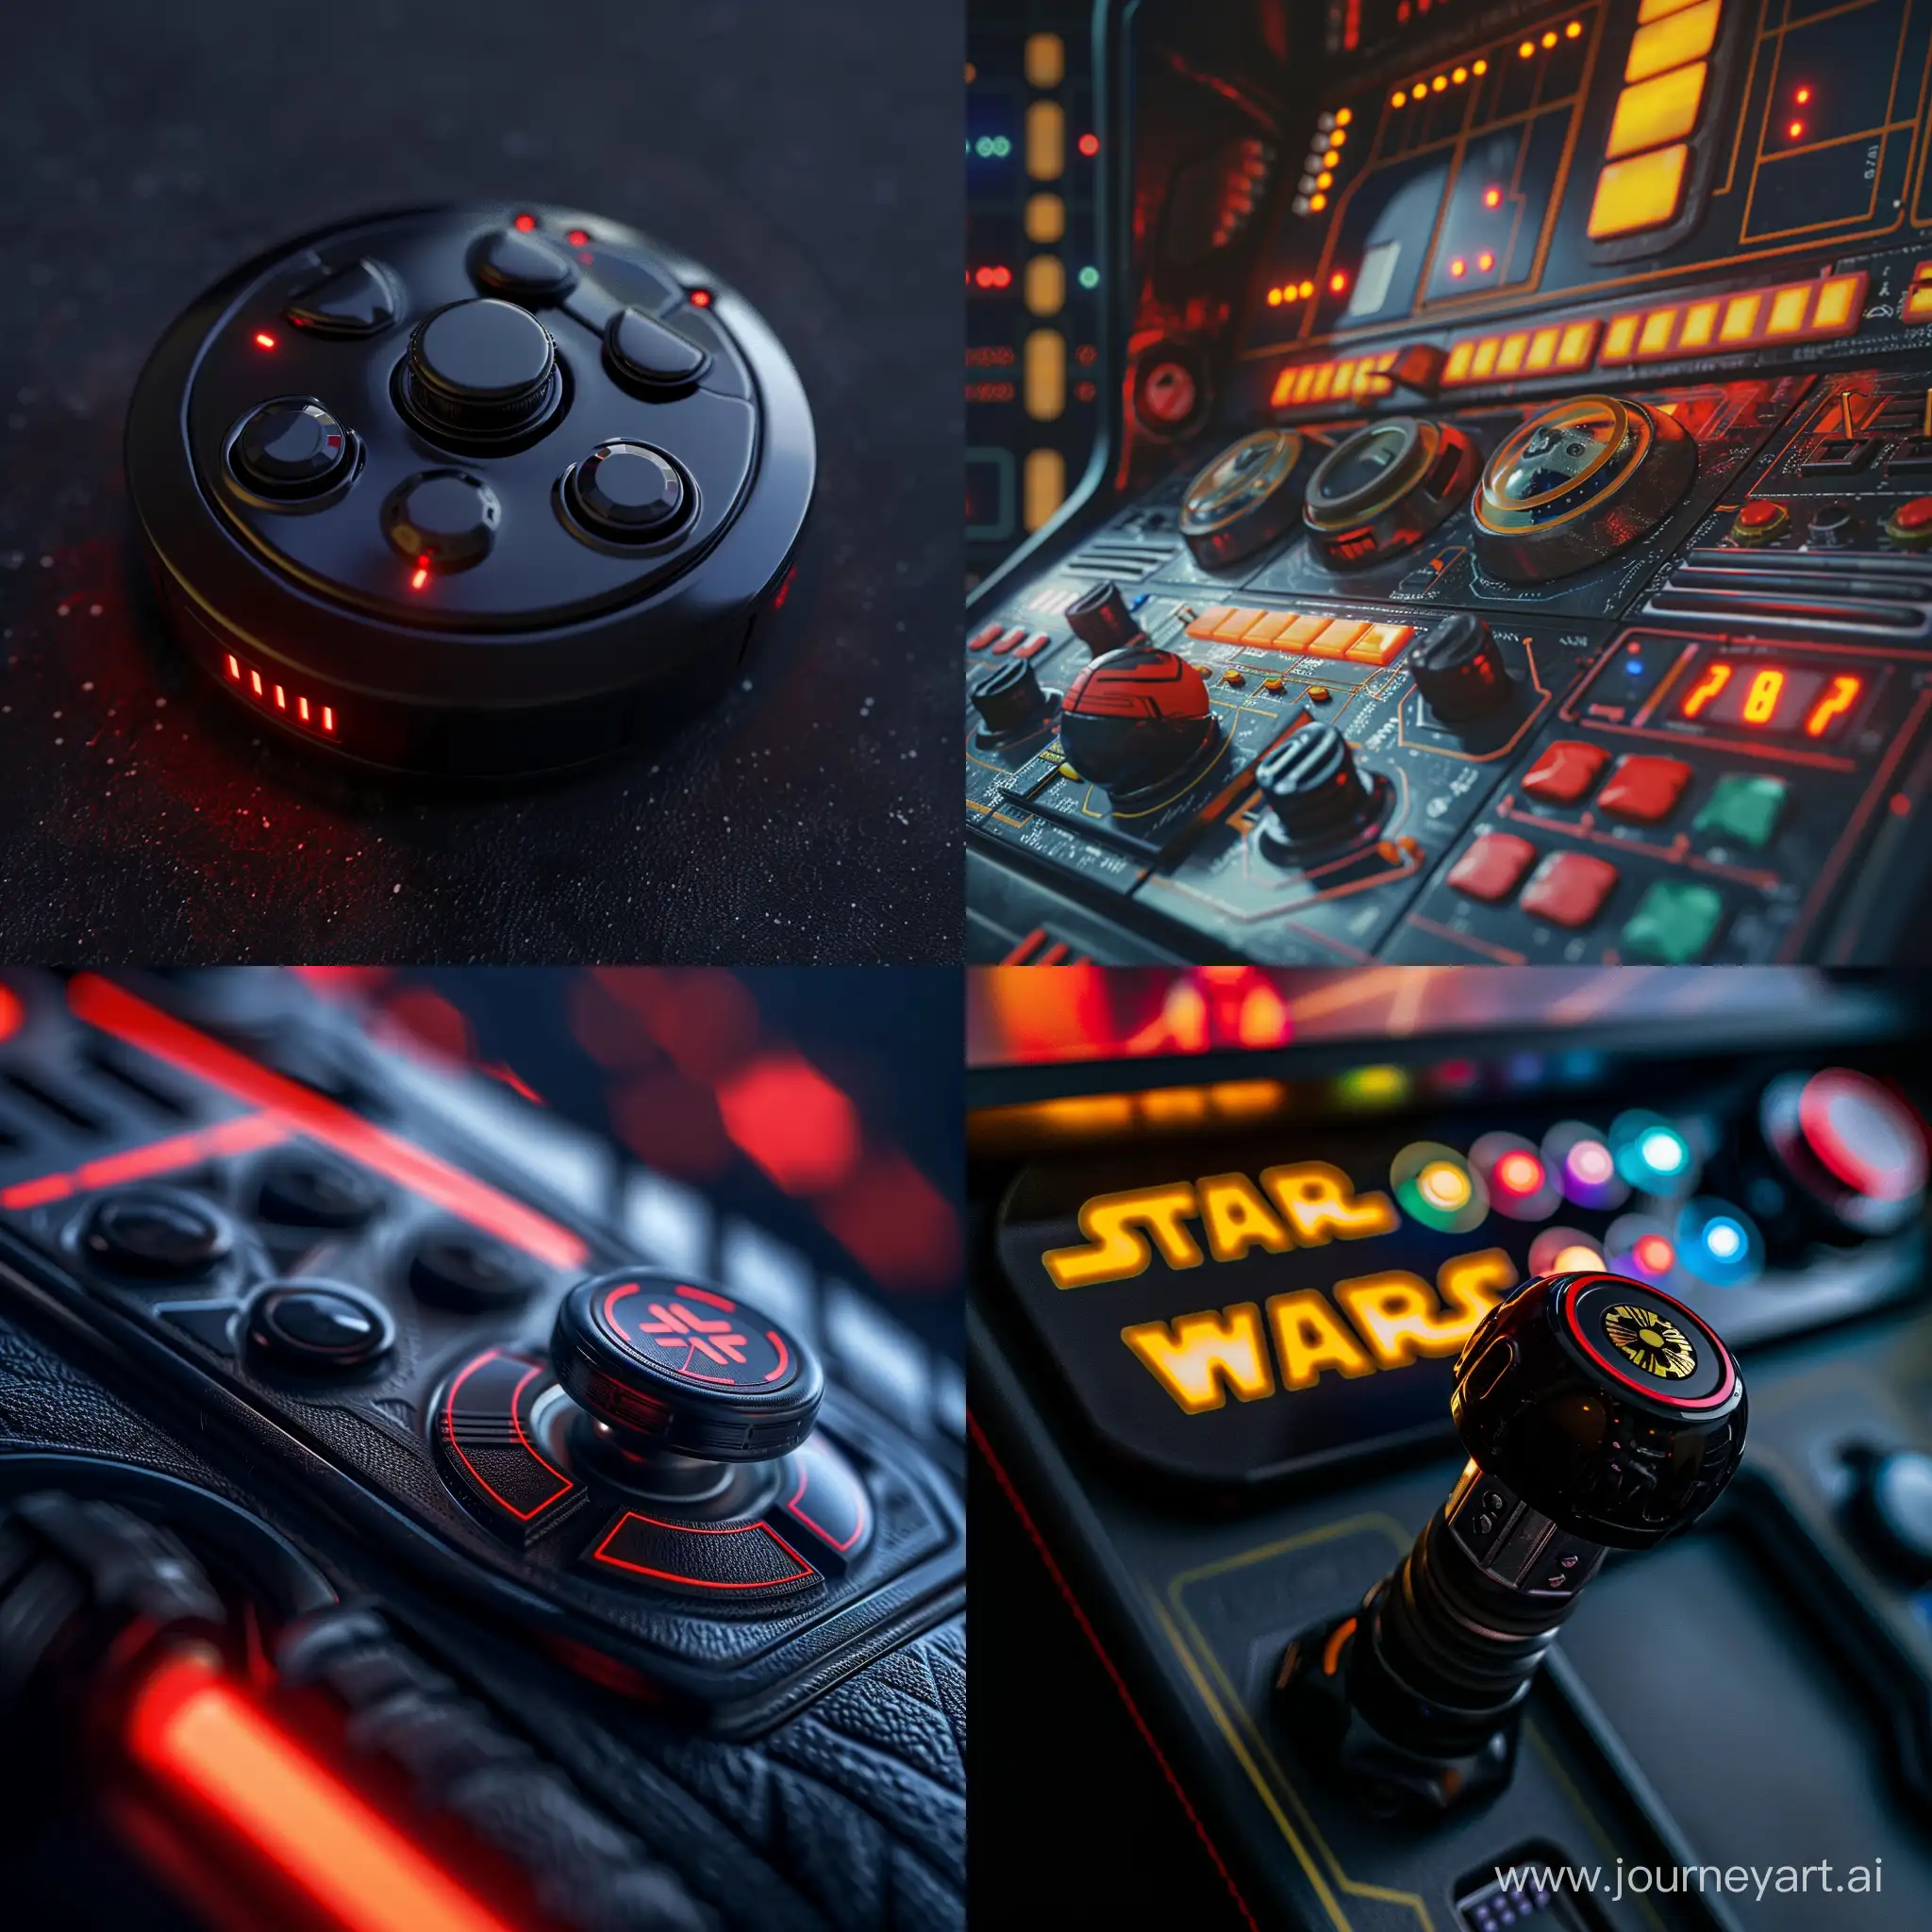 Star-Wars-Inspired-Joystick-Immersive-8K-Gaming-Experience